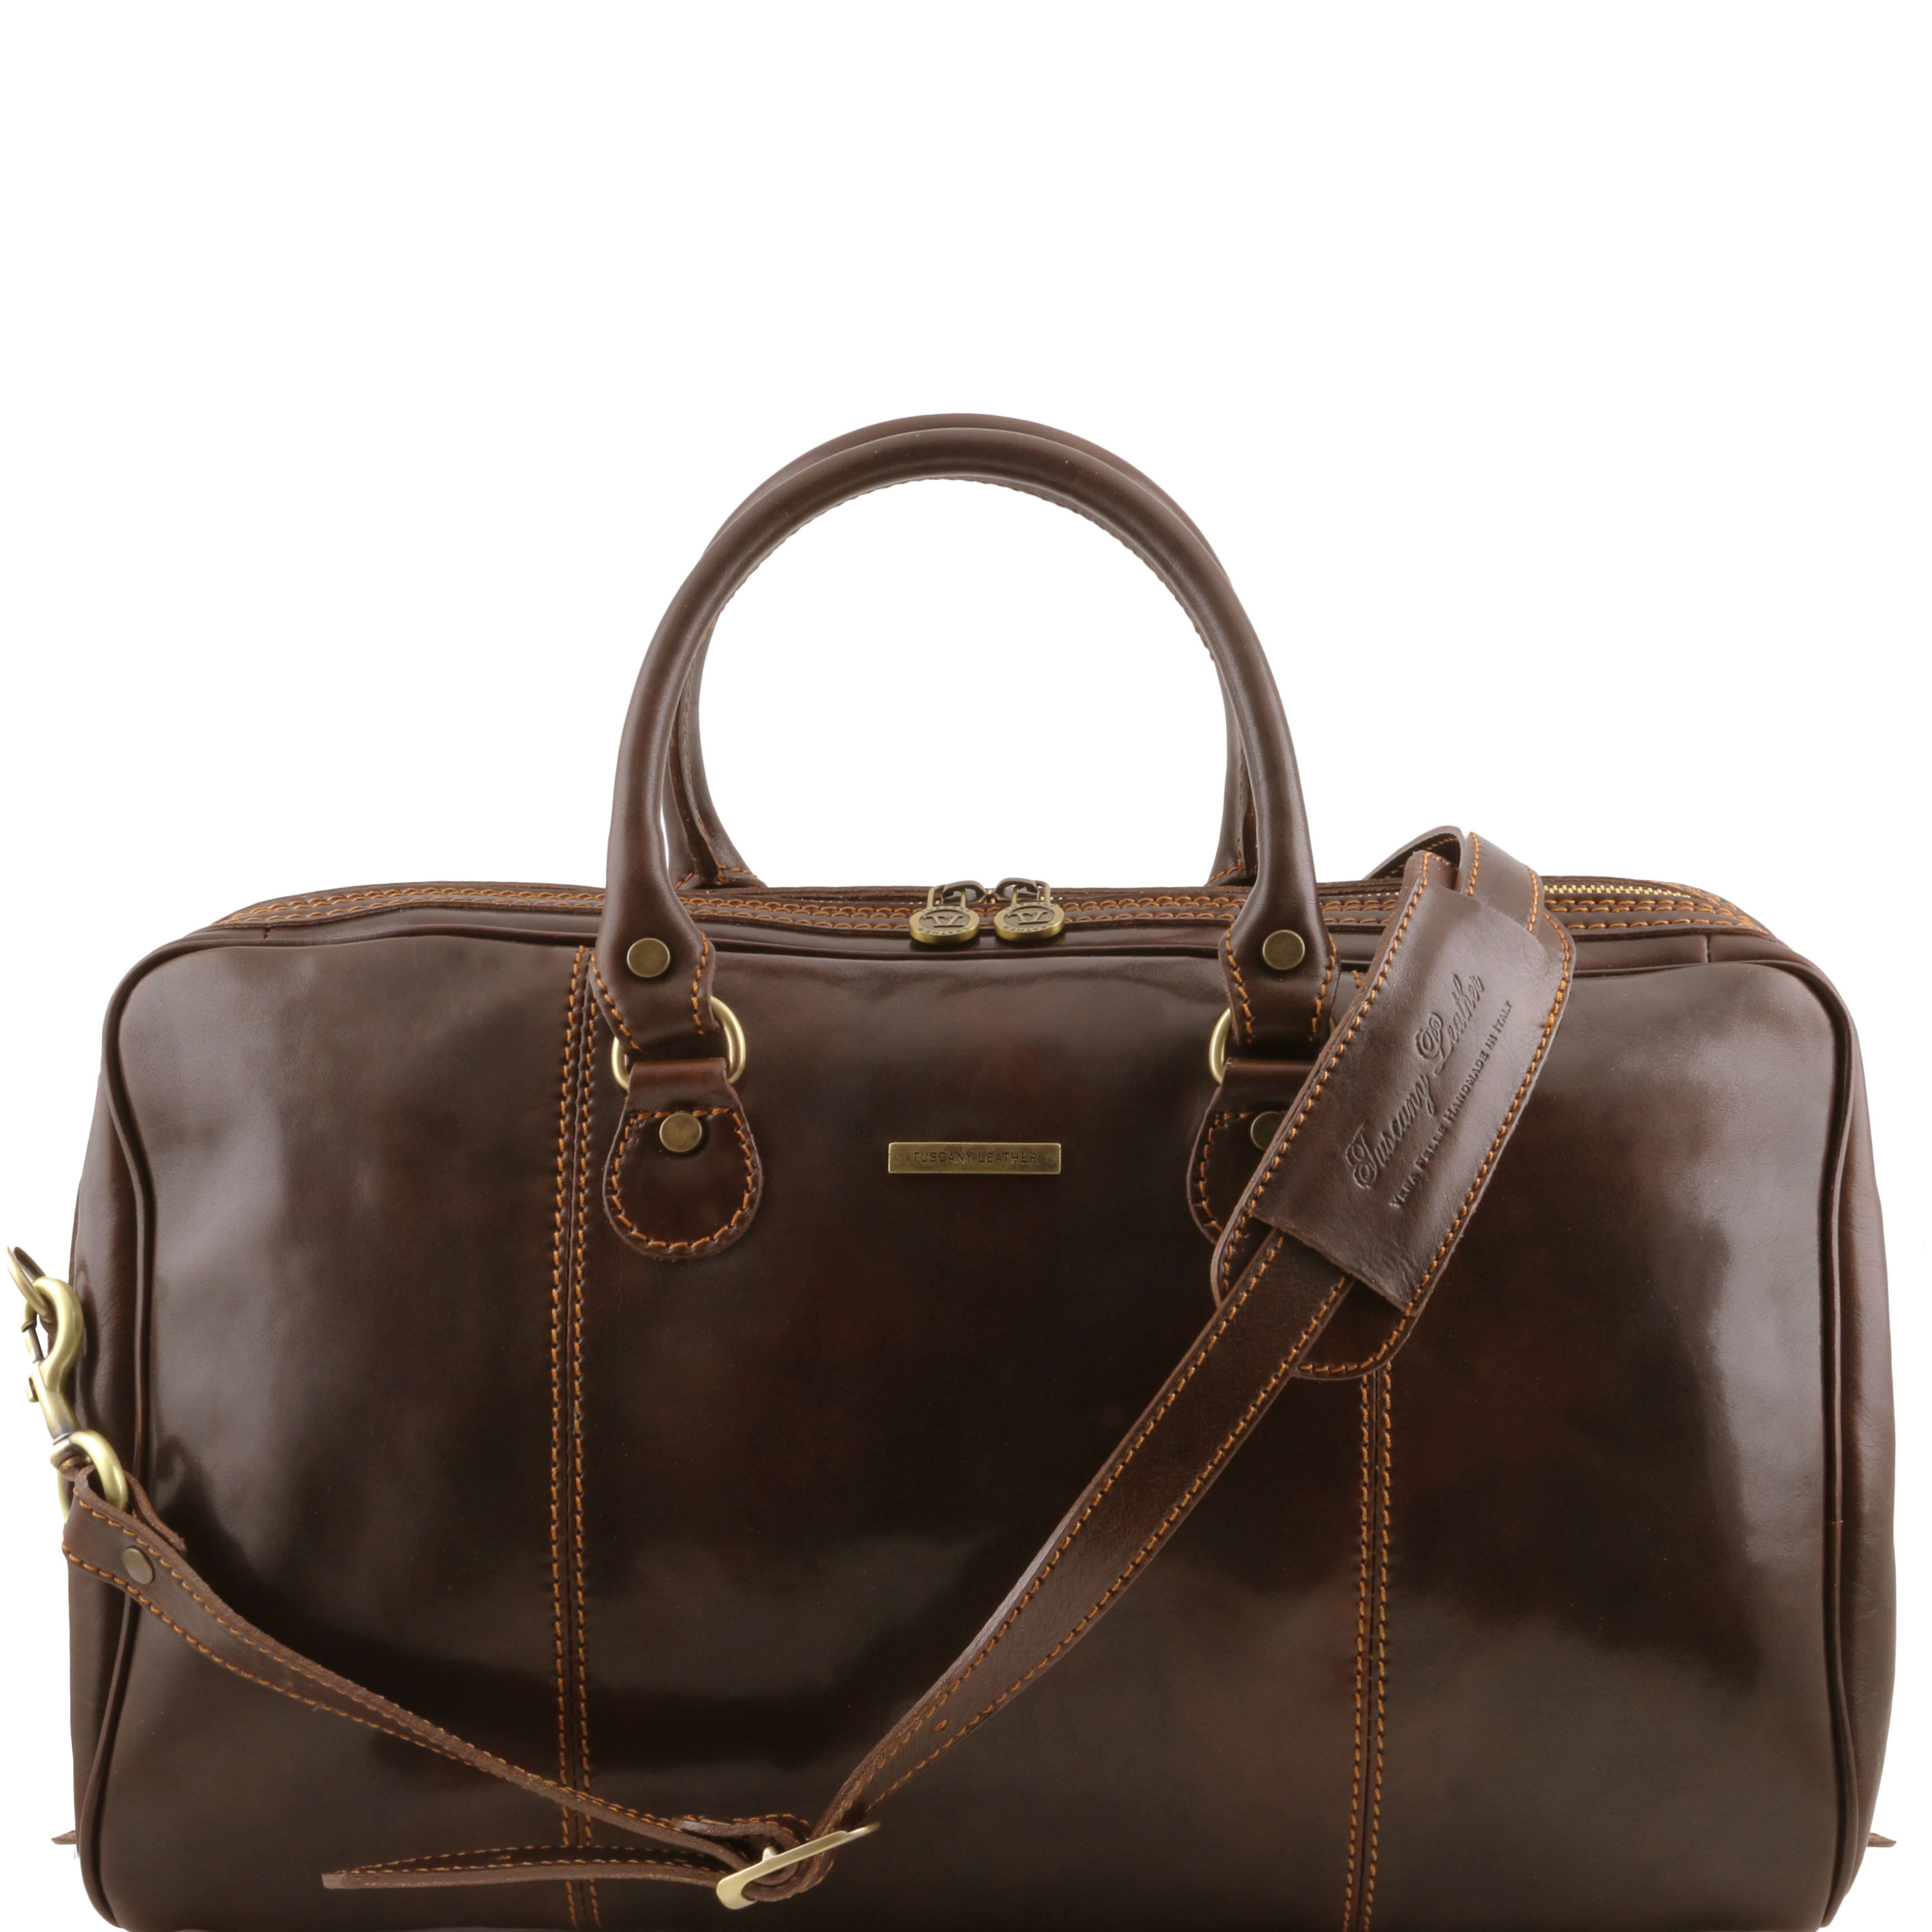 Paris Travel leather duffel bag